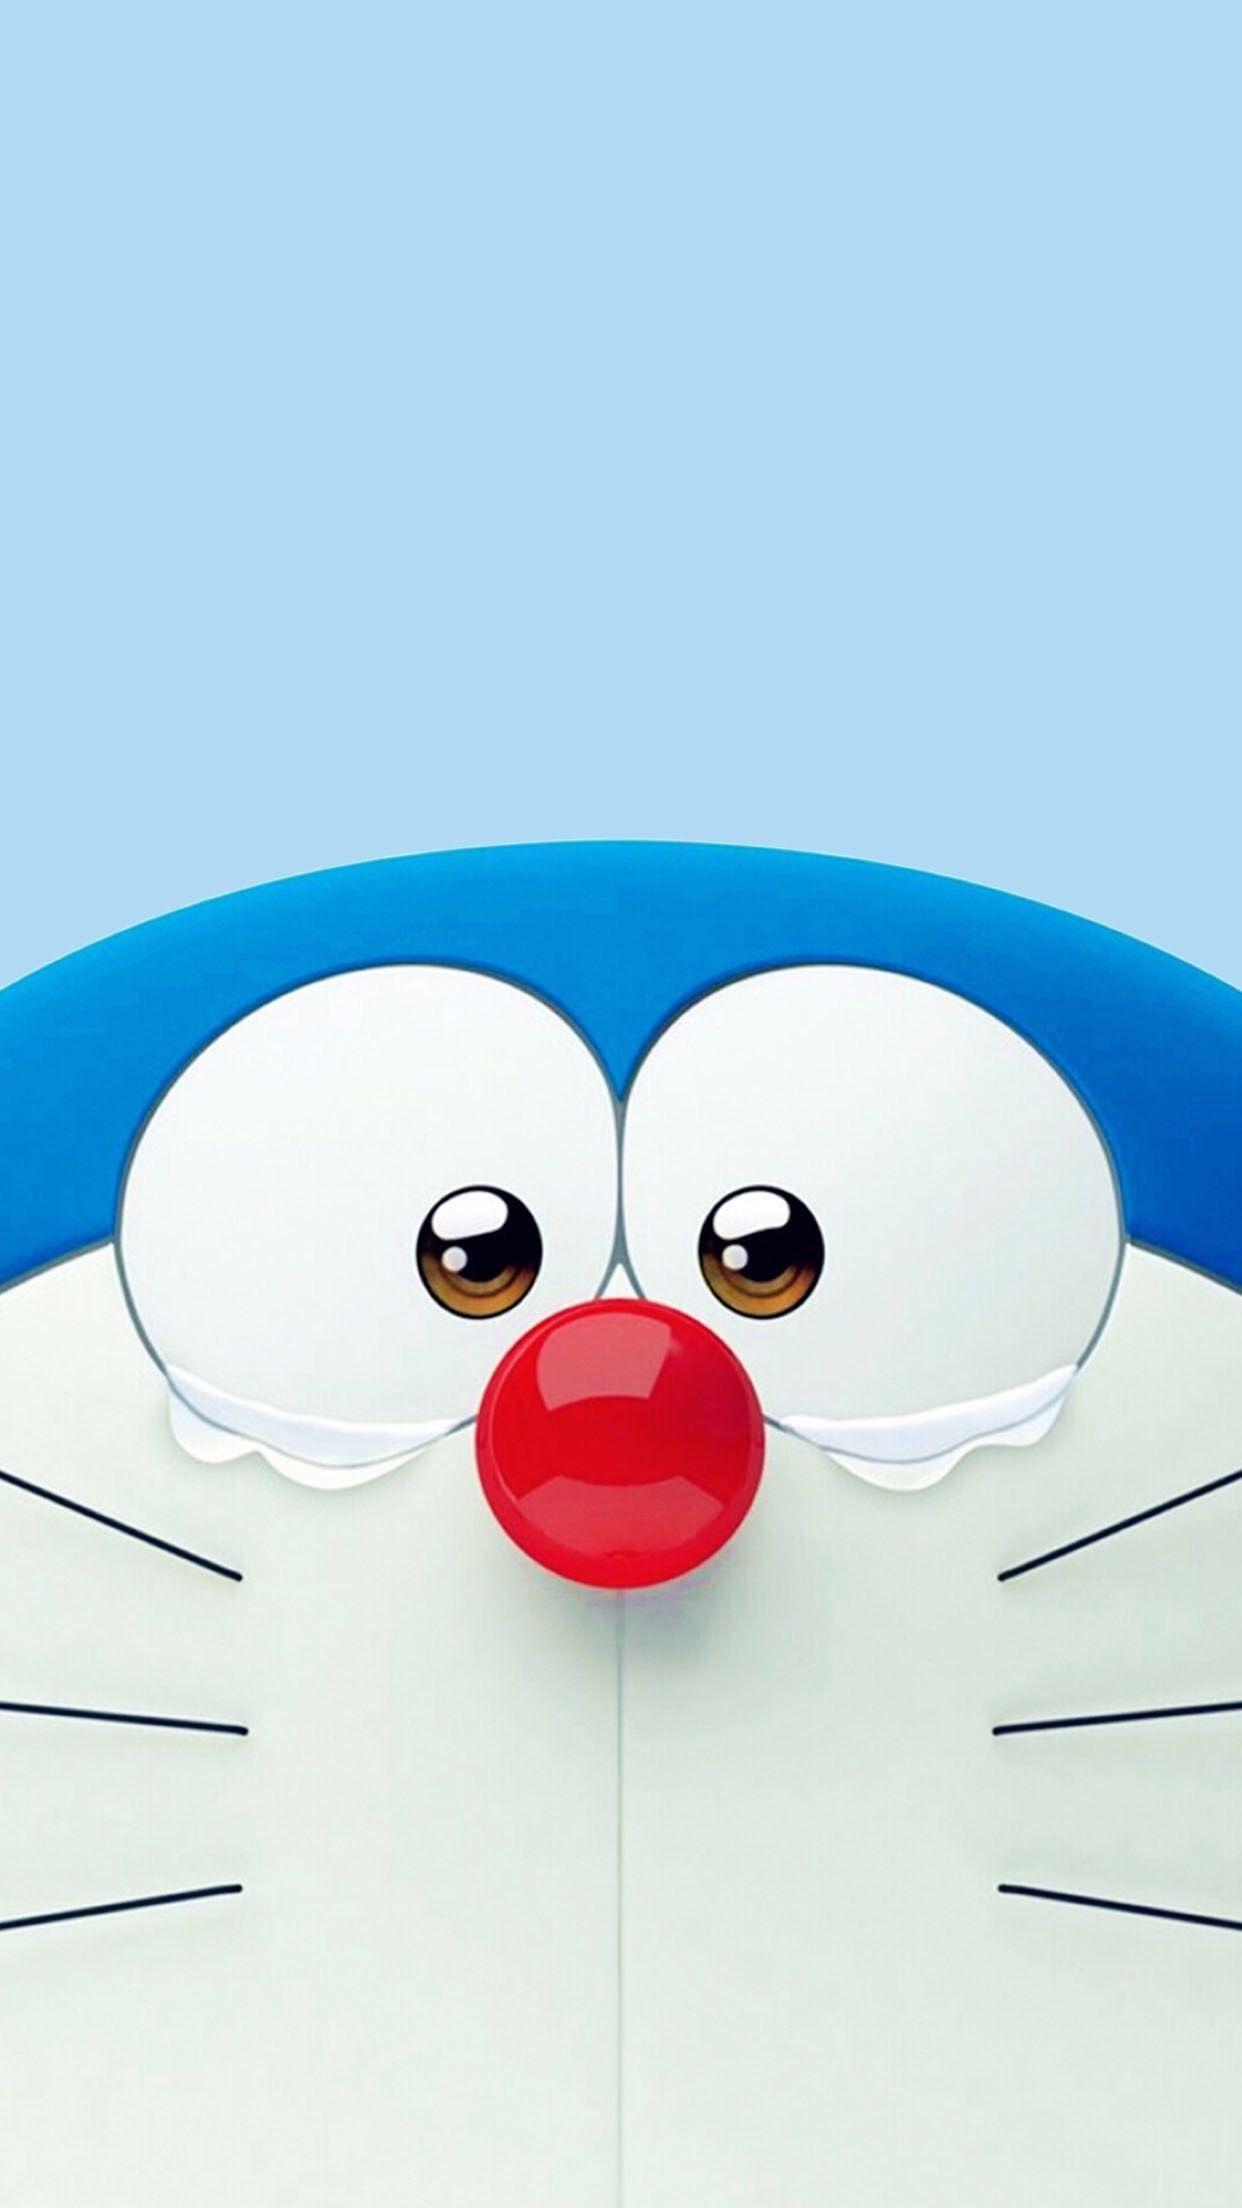 Doraemon Mobile Wallpapers Top Free Doraemon Mobile Backgrounds Wallpaperaccess - roblox doraemon